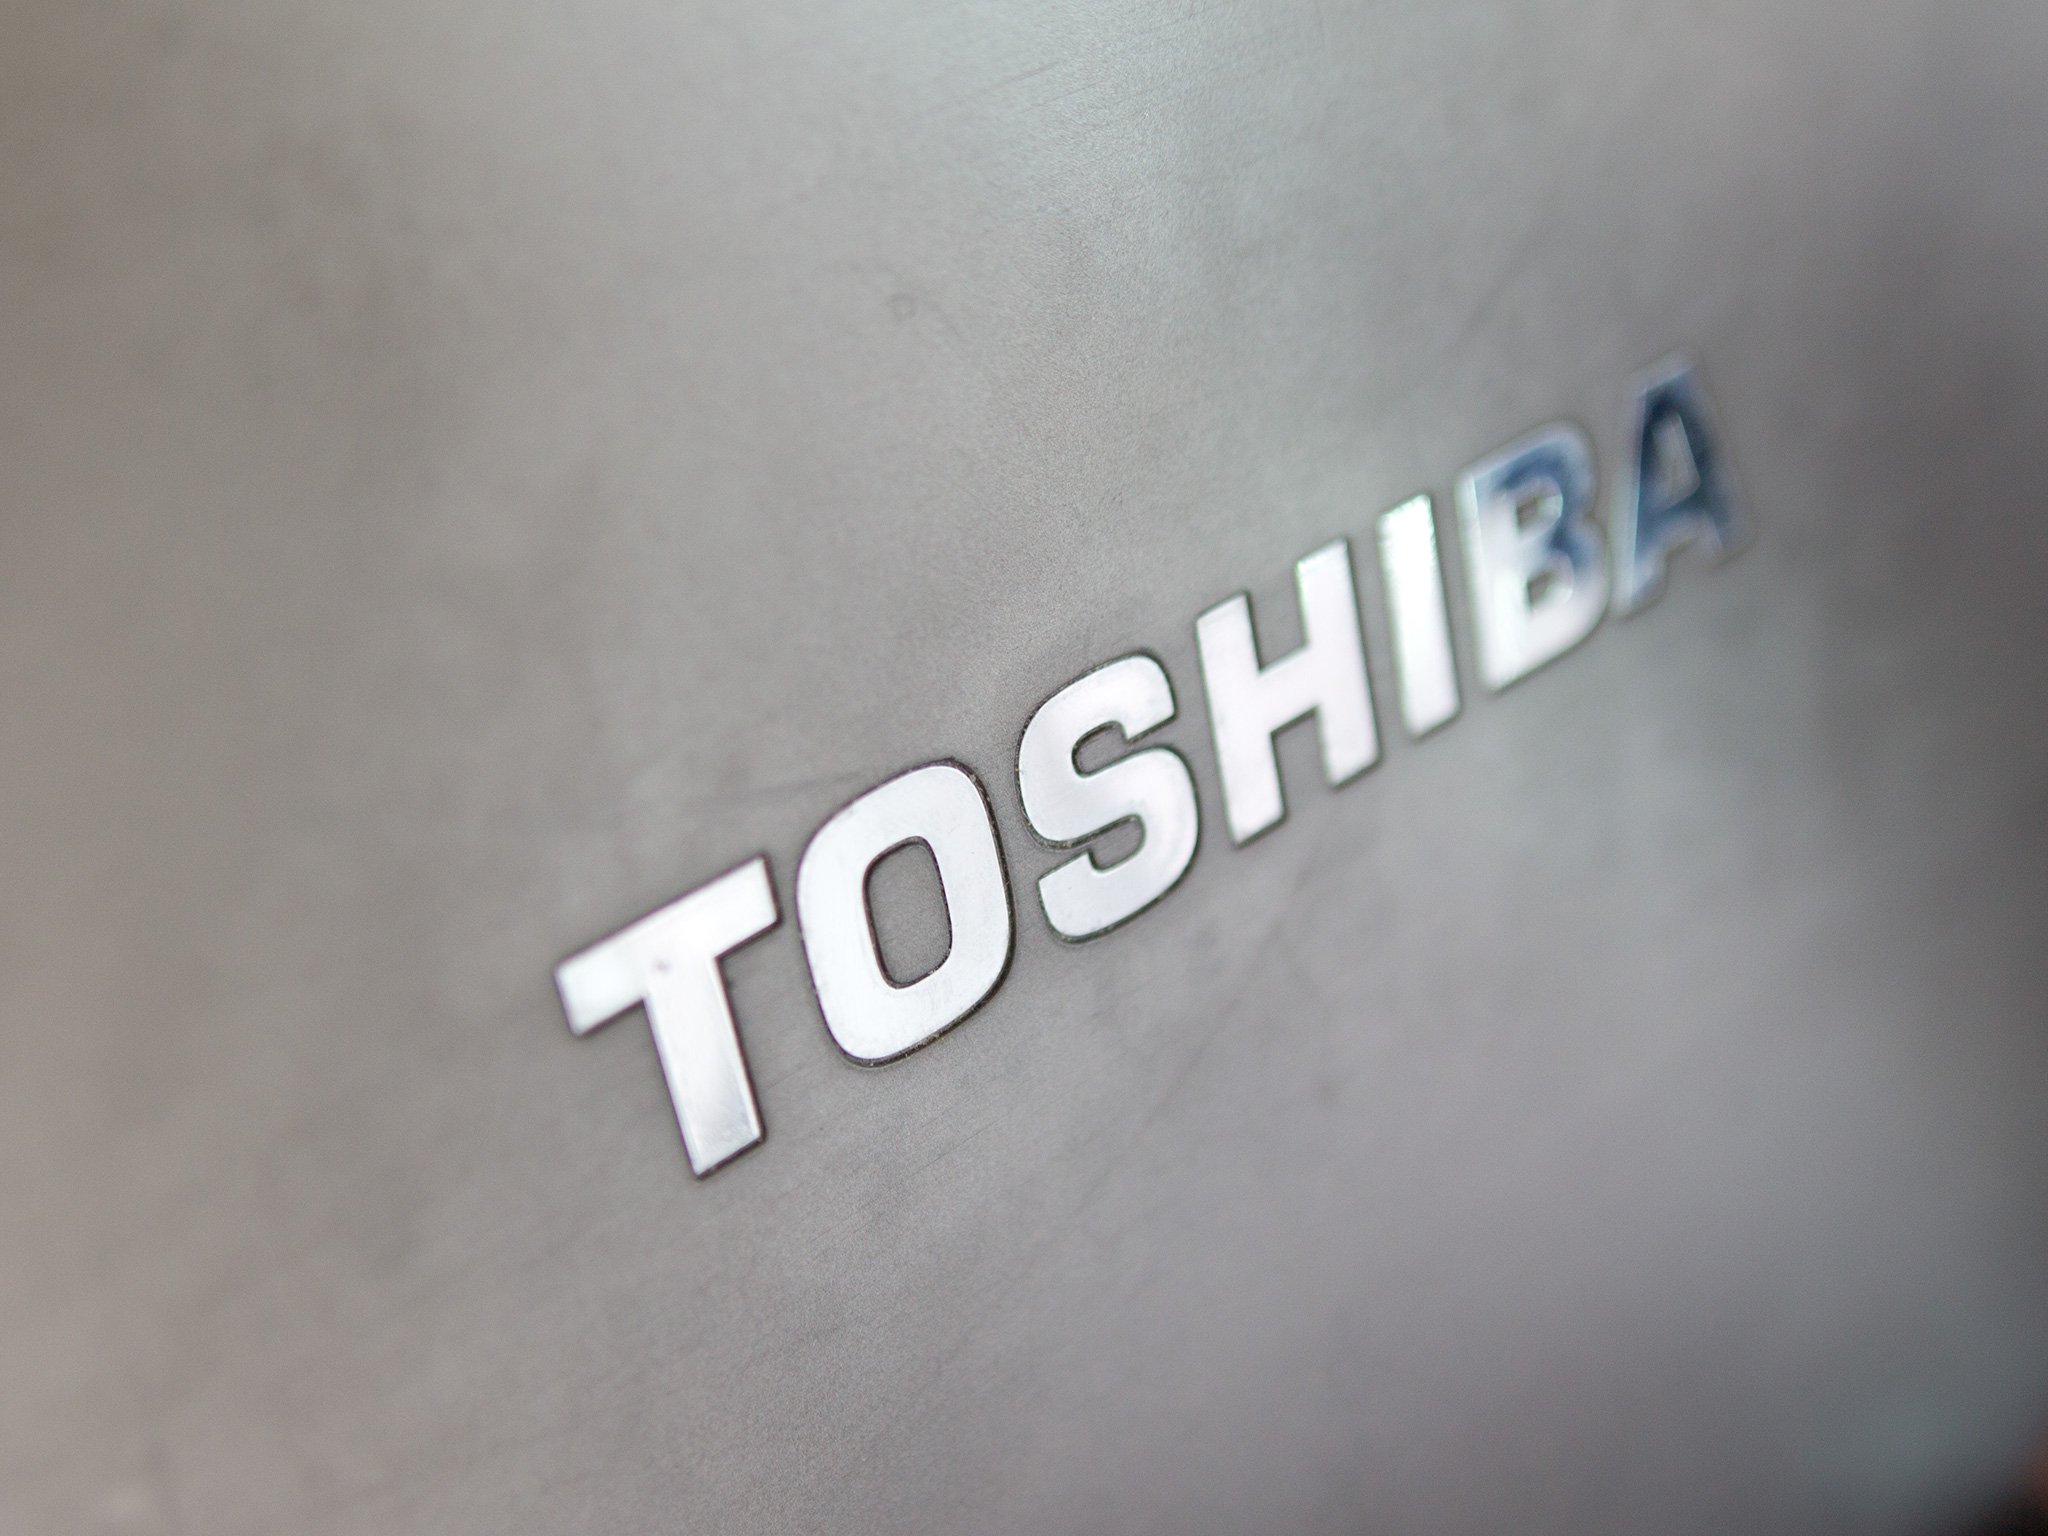 toshiba-logo-hero.jpg